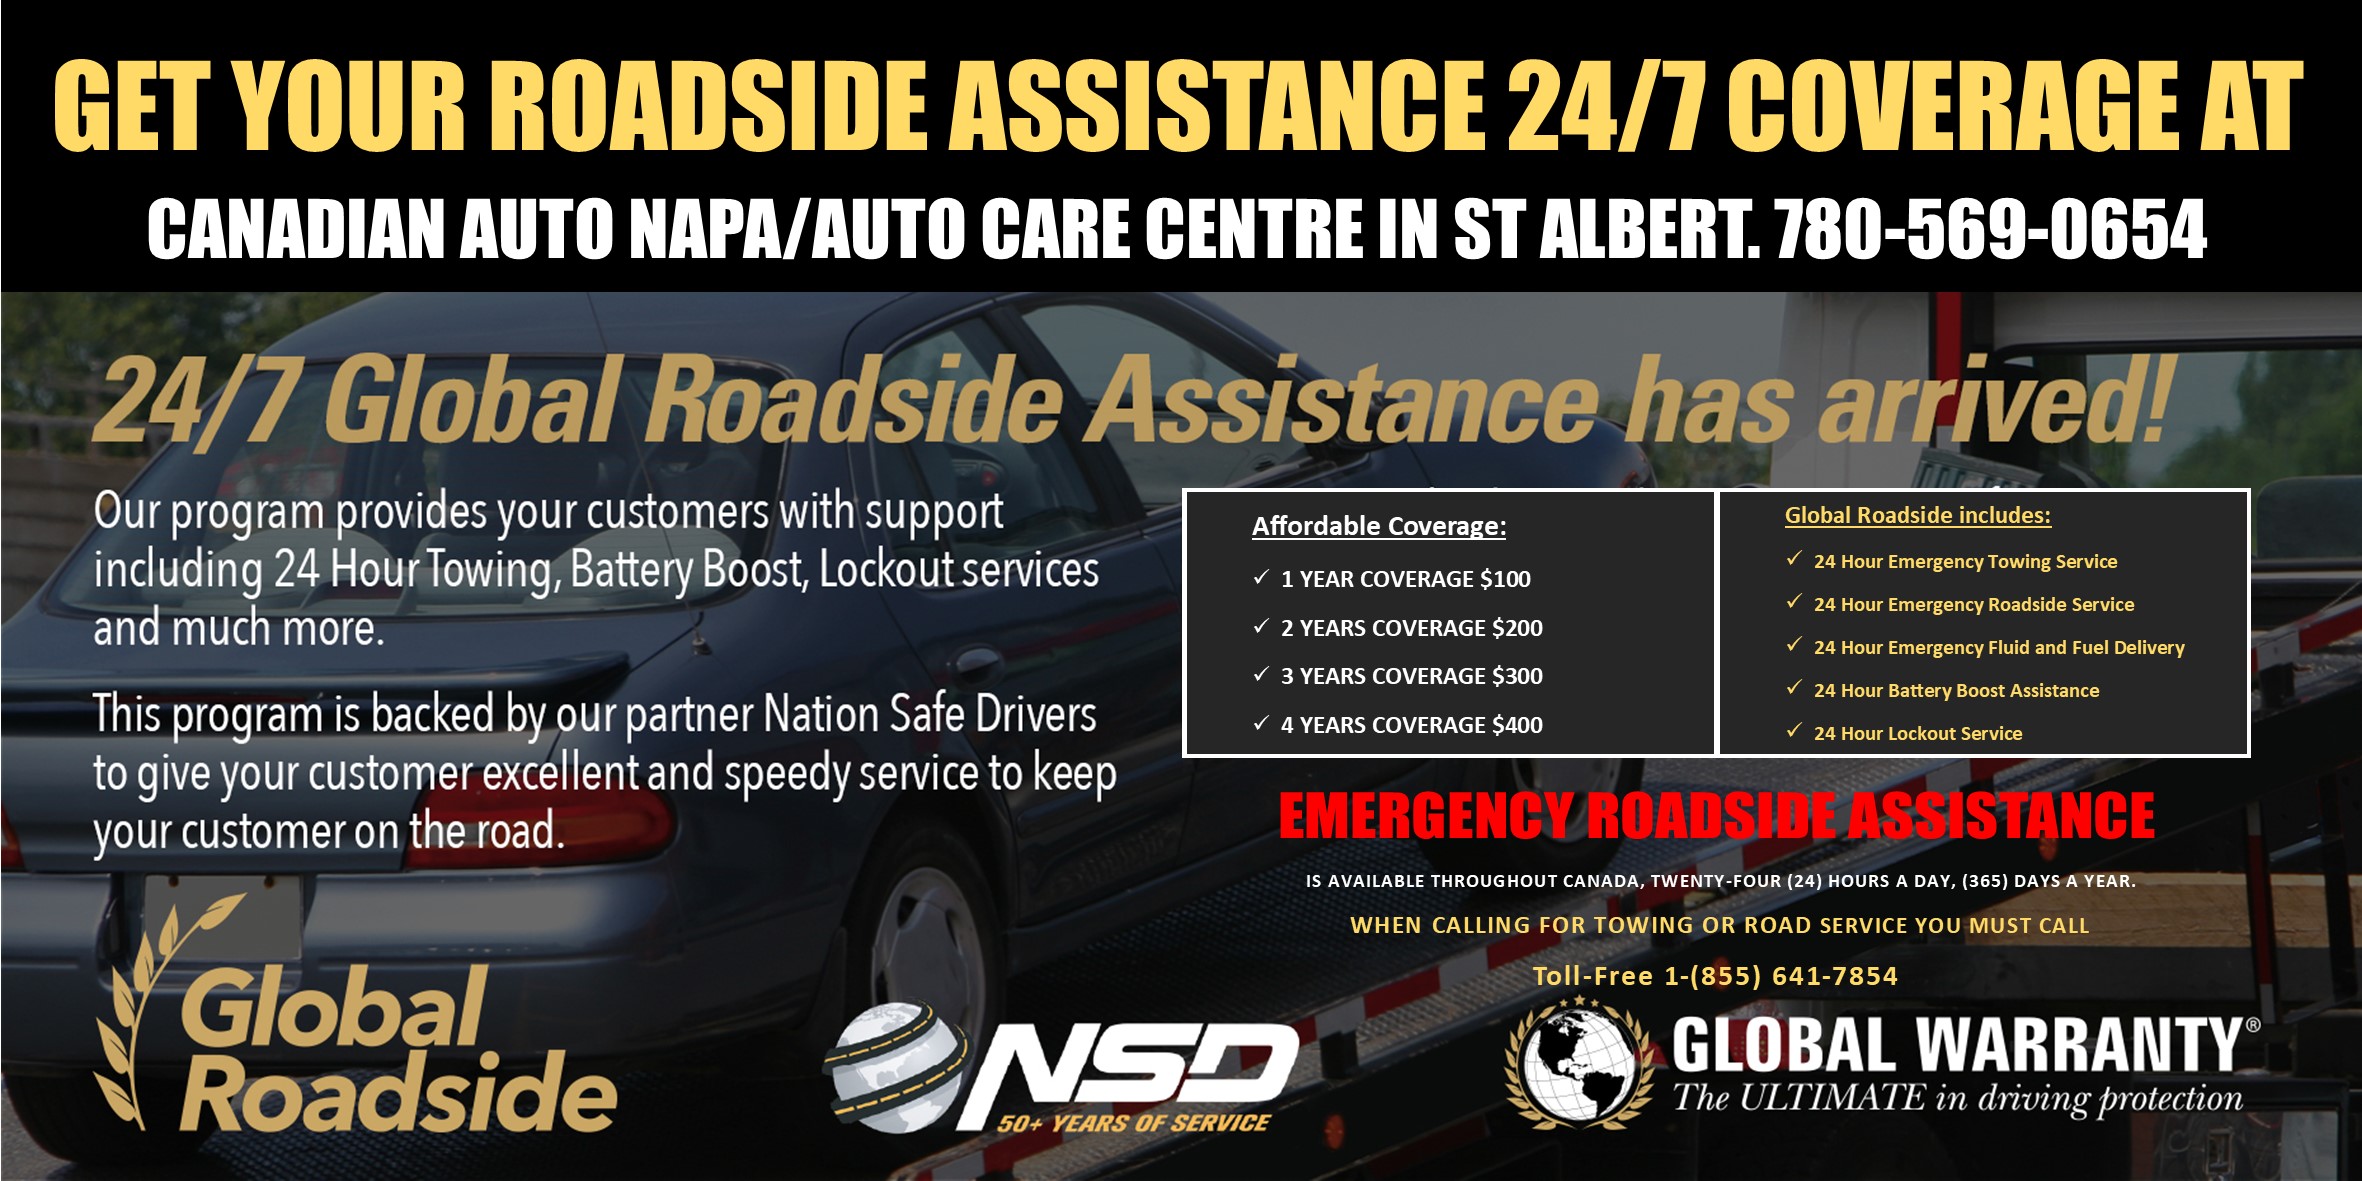 Get a Roadside Assistance 24/7